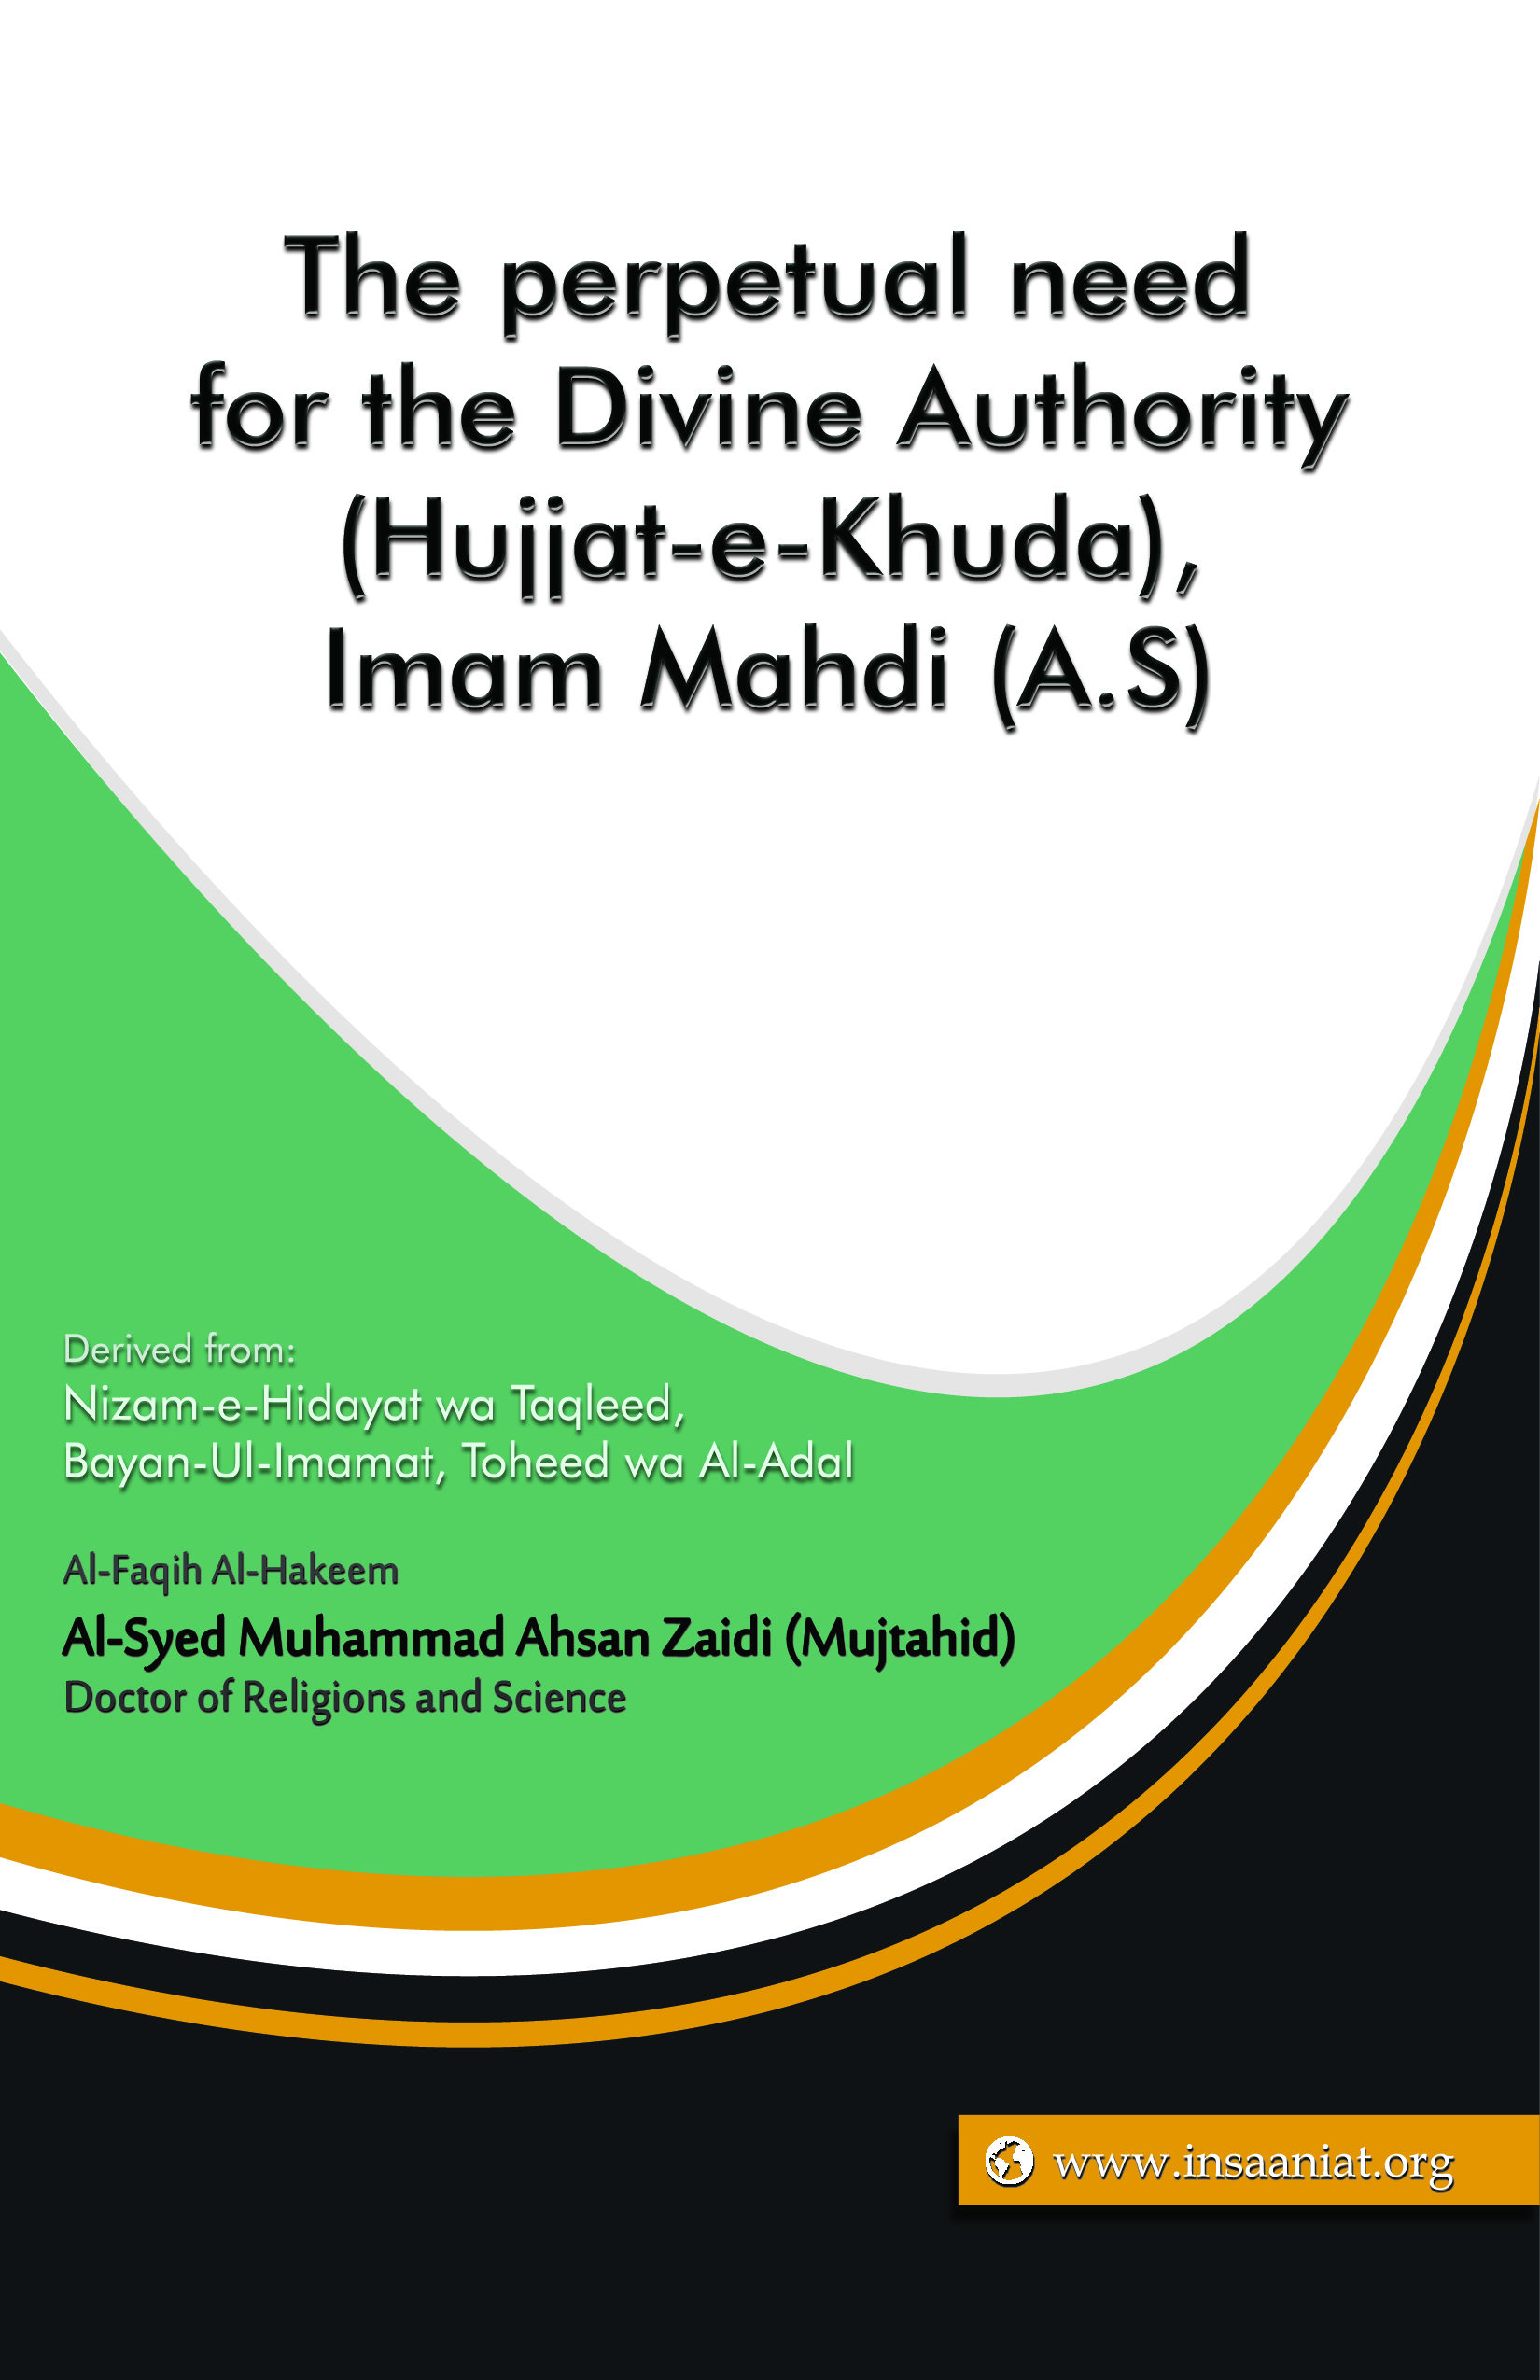 The perpetual need of Hujjat-e-Khuda (A.S)